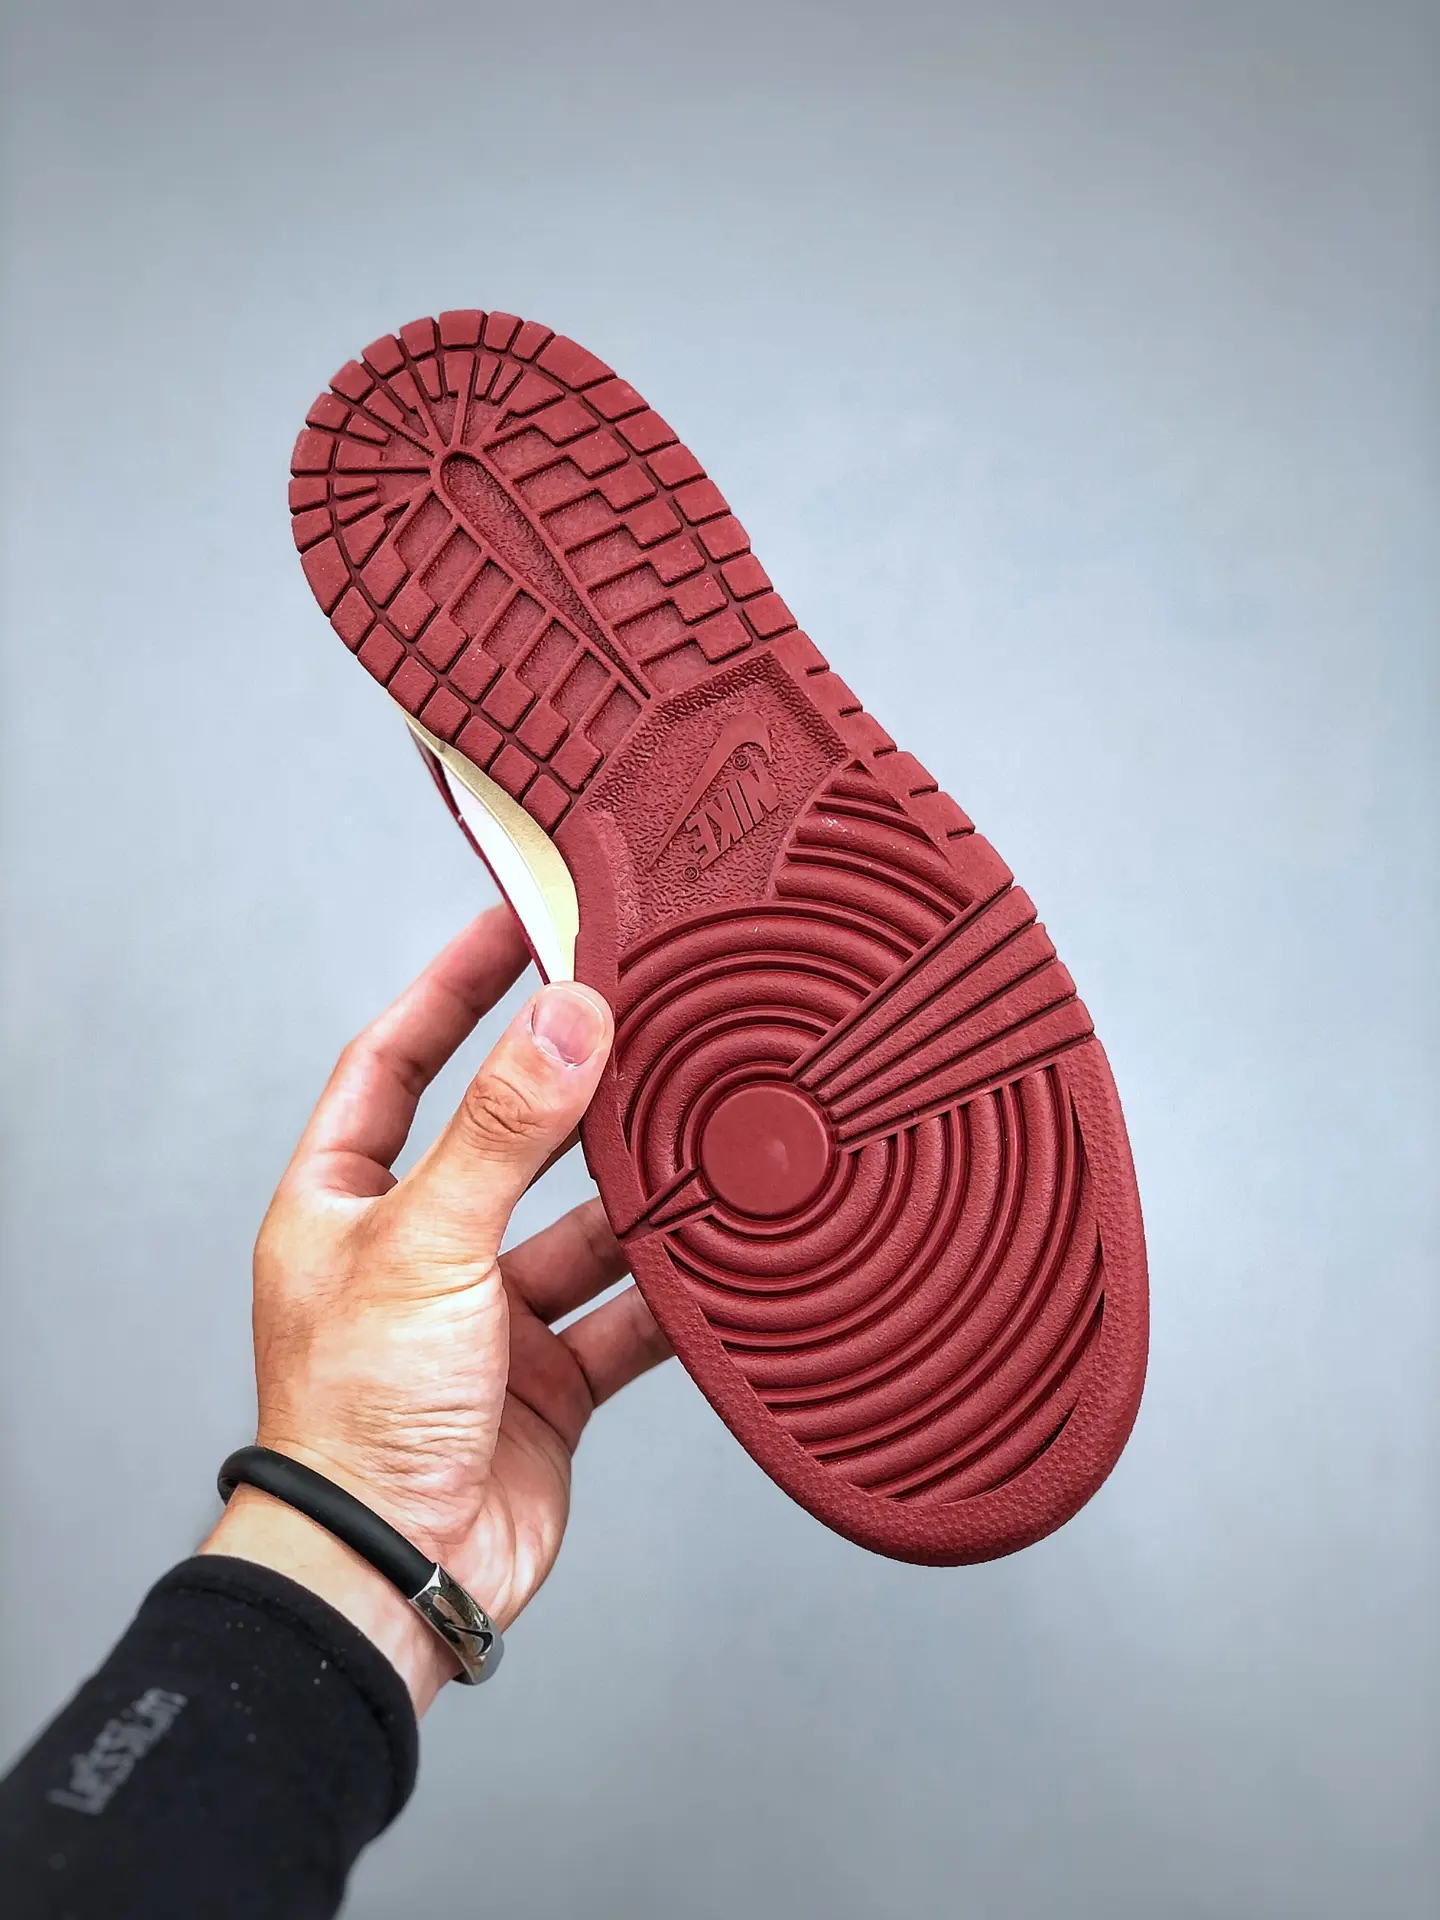 Nike Dunk Low PRM Vintage Team Red Sneakers Review | YtaYta